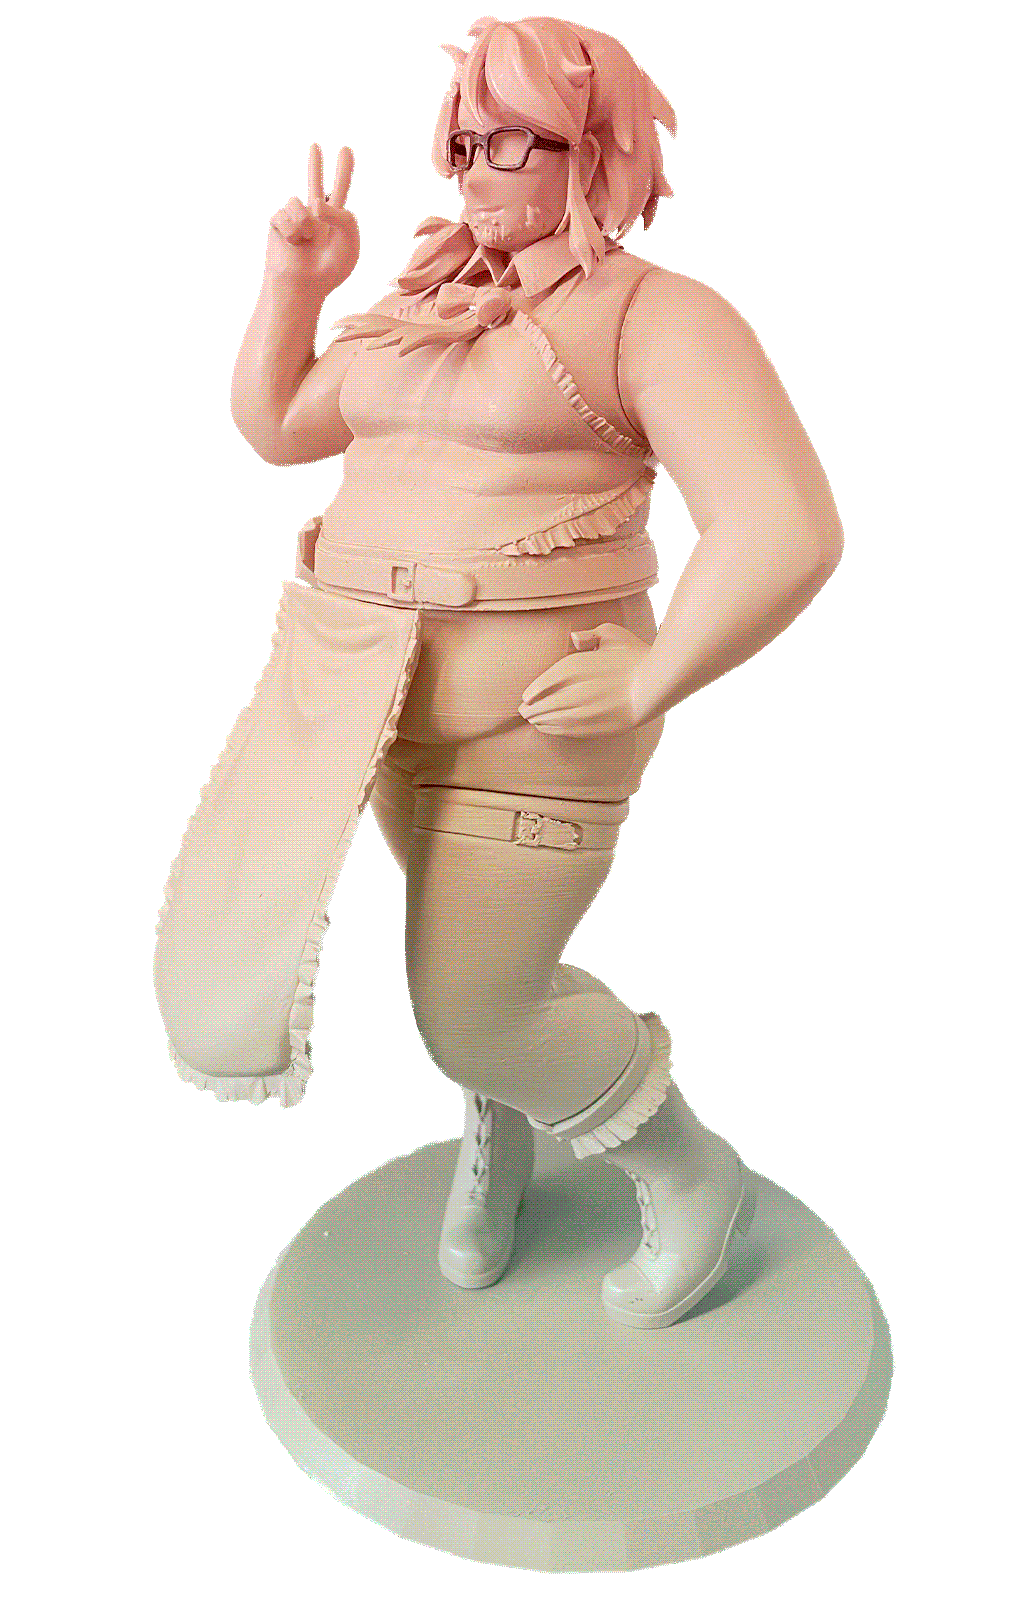 Photograph of Mel Breathsbrooke unpainted resin figurine.